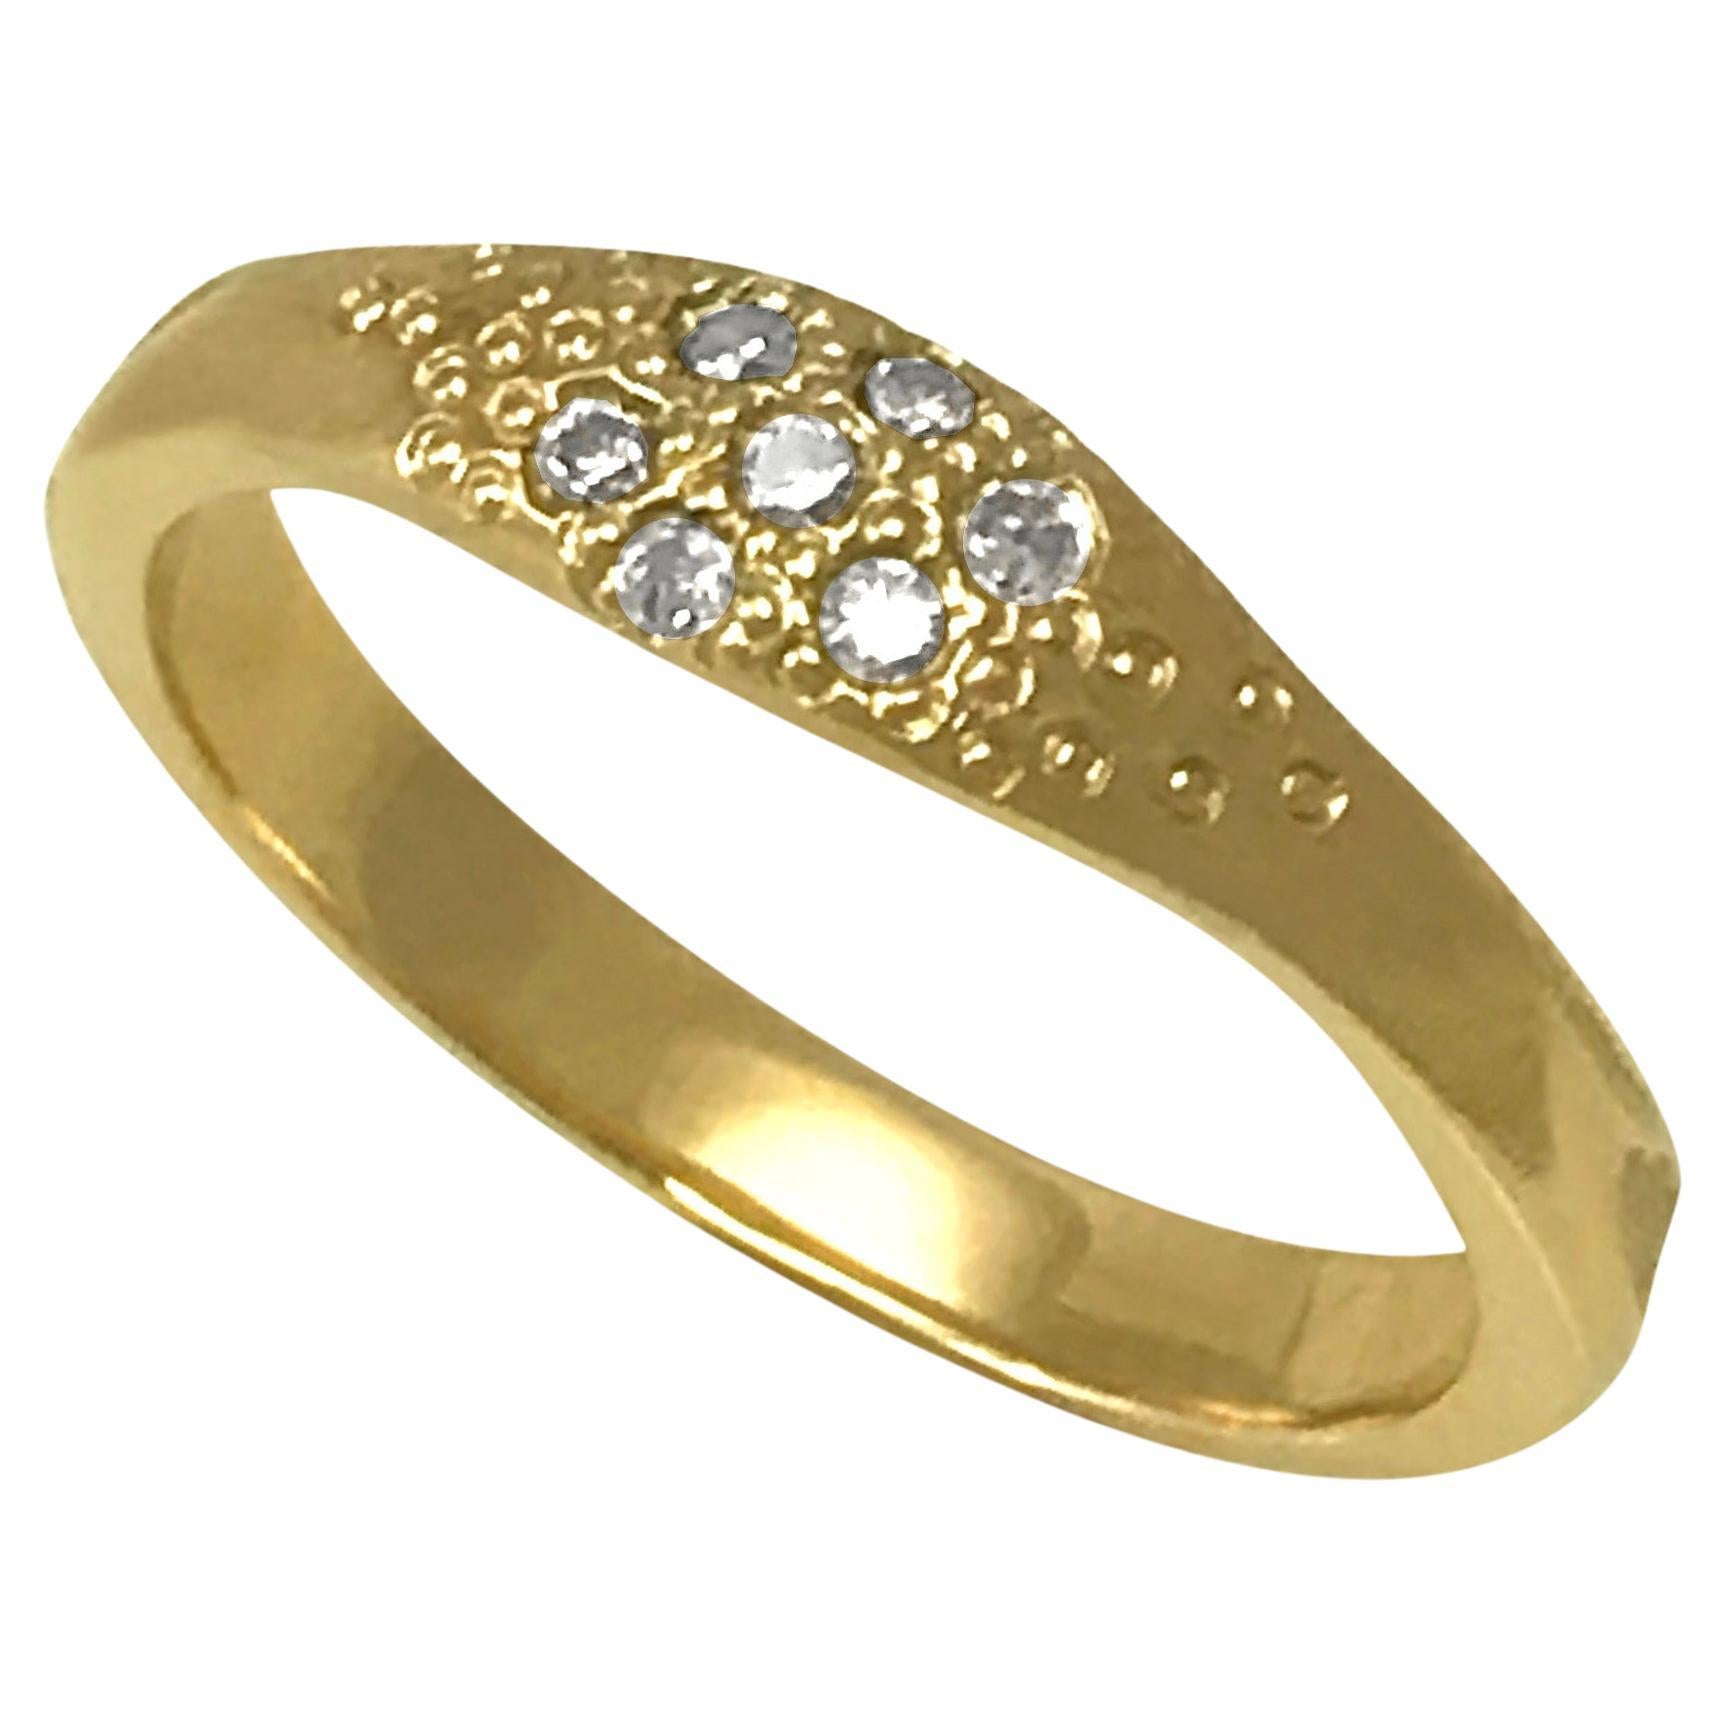 Textured 14 Karat Yellow Gold Diamond Cluster Ring from K.Mita, L